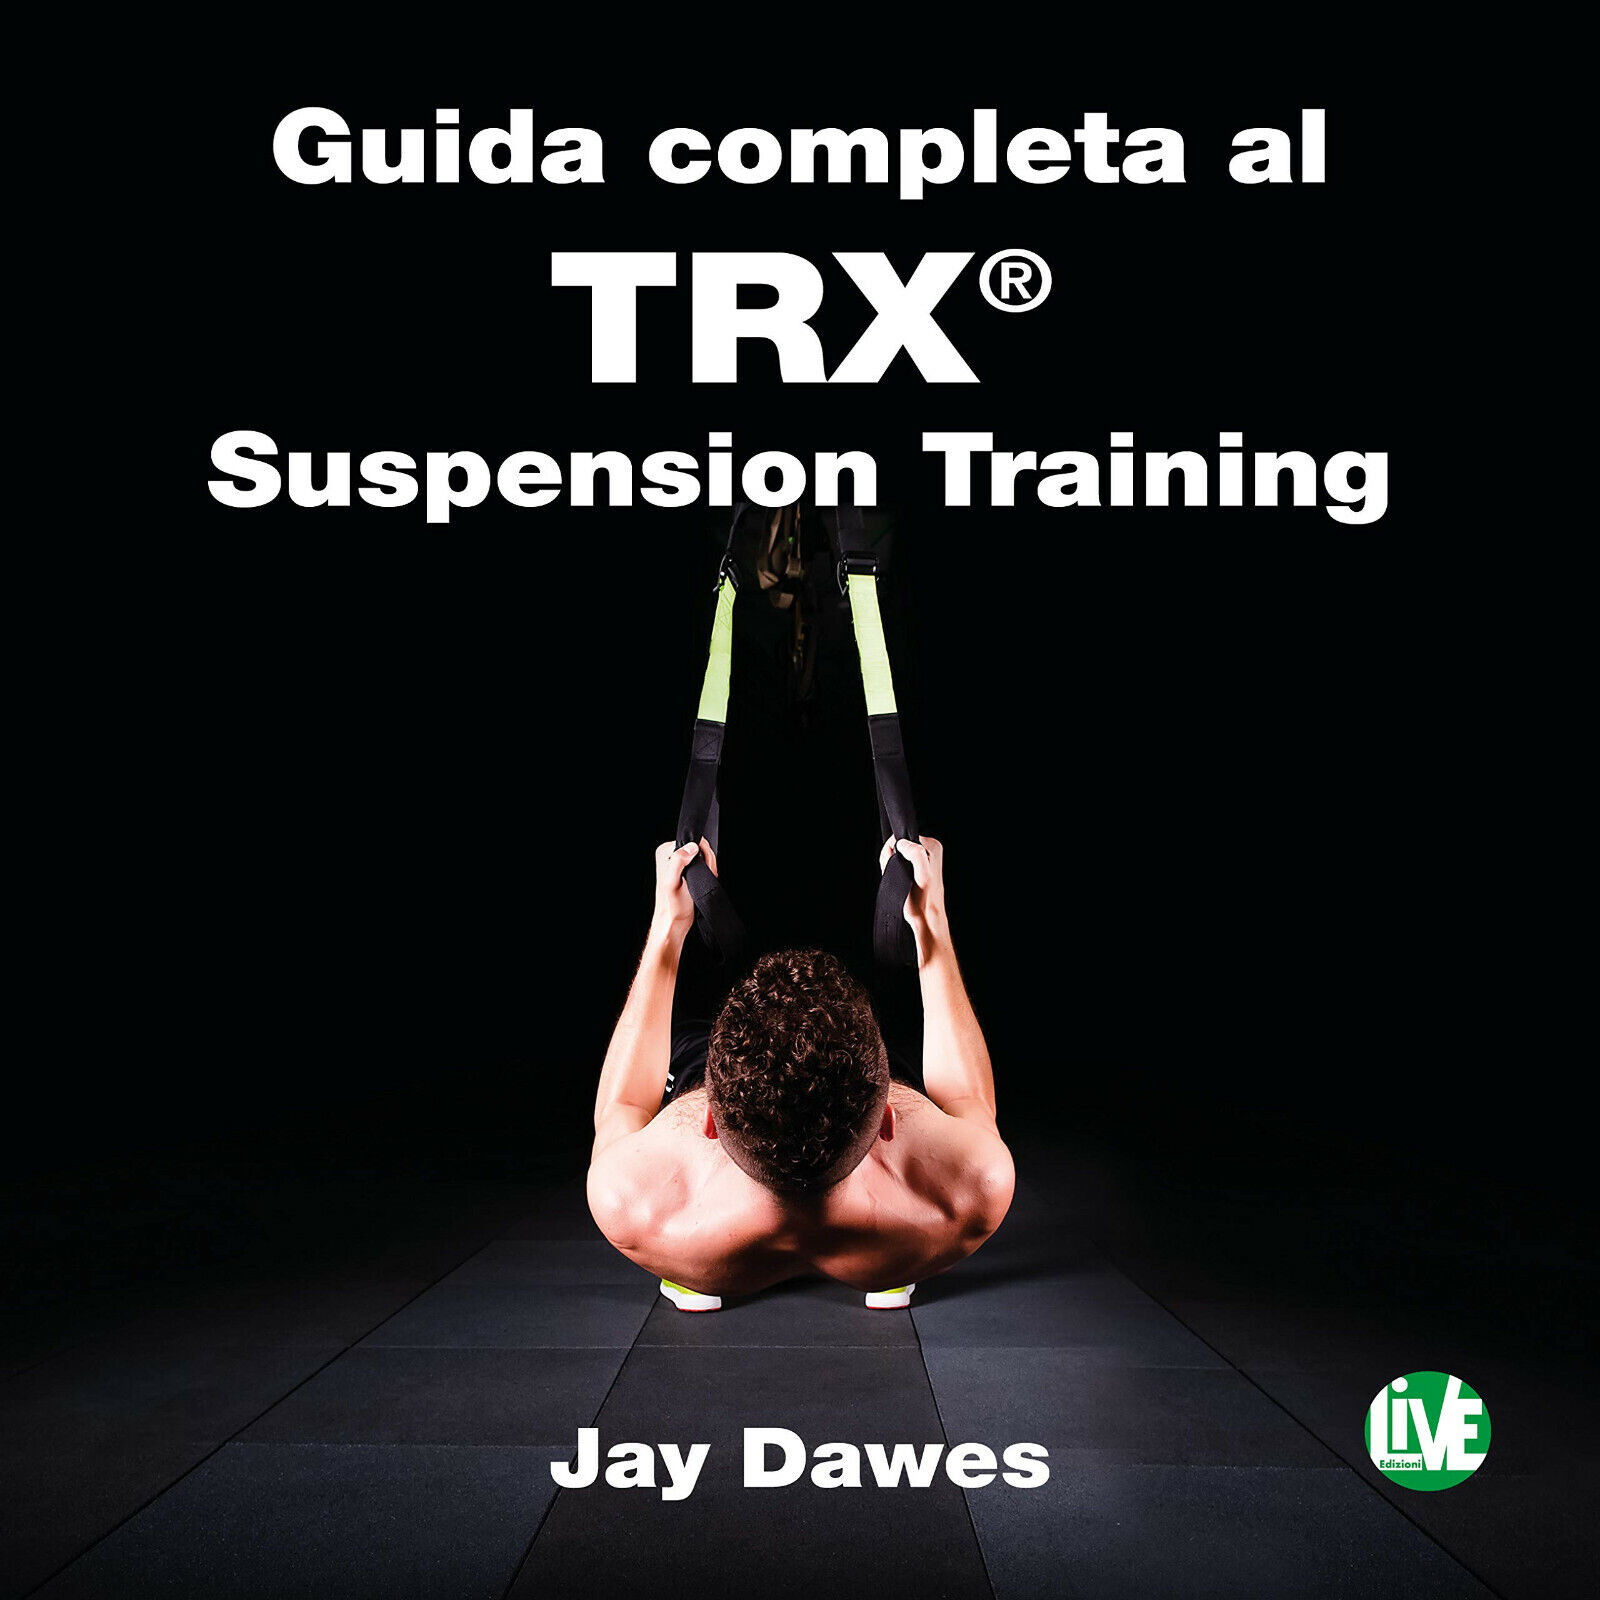 Guida completa al trx suspension - Jay Dawes - LIVE Edizioni, 2019